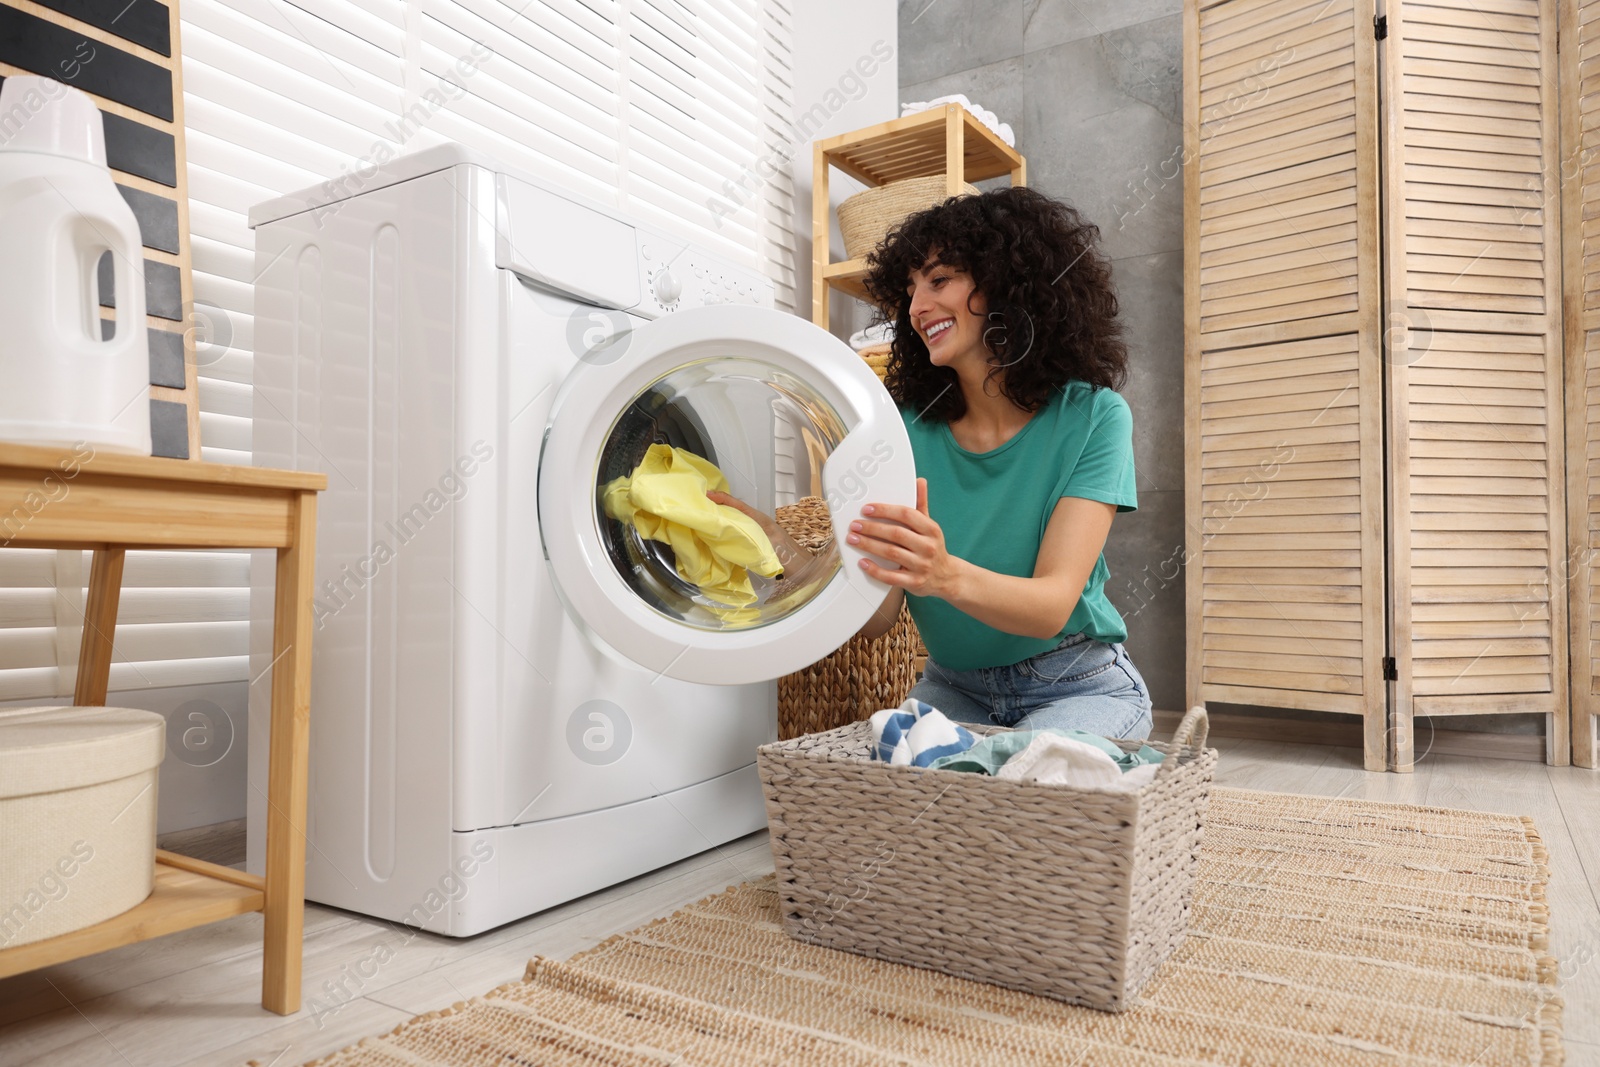 Photo of Happy woman putting laundry into washing machine indoors